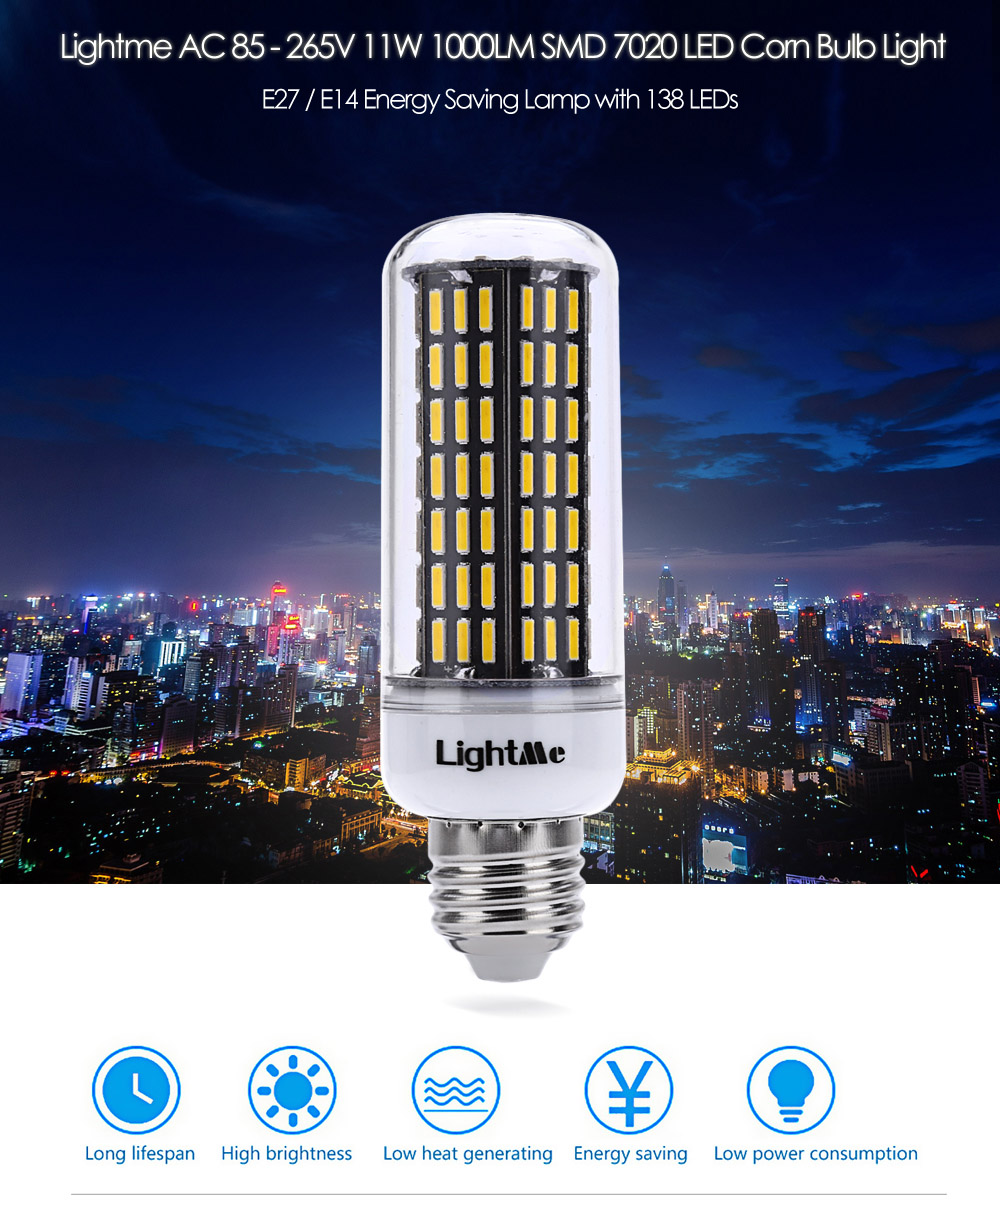 Lightme E14 AC 85 - 265V 11W 1000LM SMD 7020 LED Corn Bulb Light Energy Saving Lamp with 138 LEDs